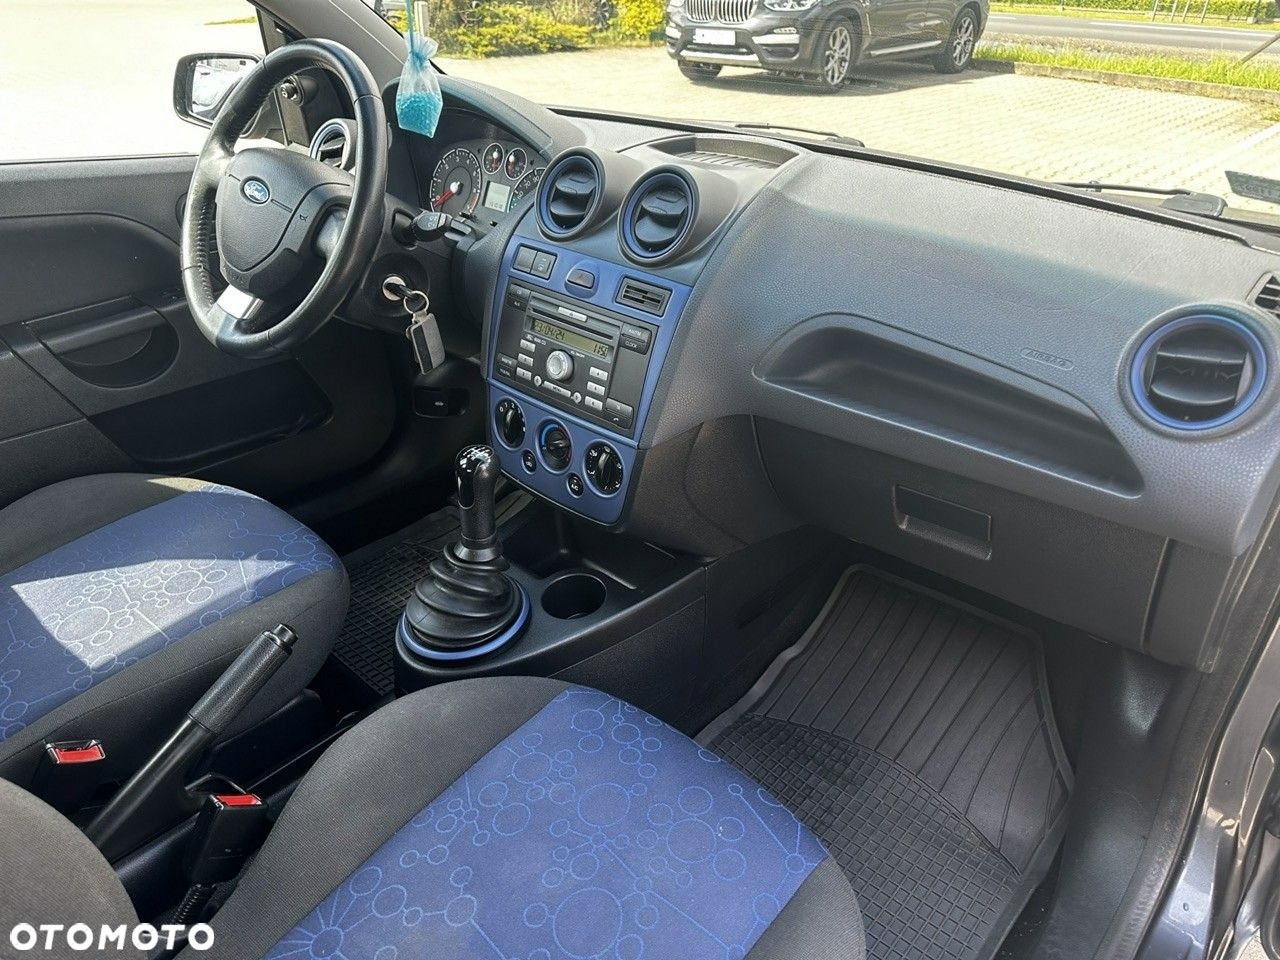 Ford Fiesta 1.3 Ambiente - 11